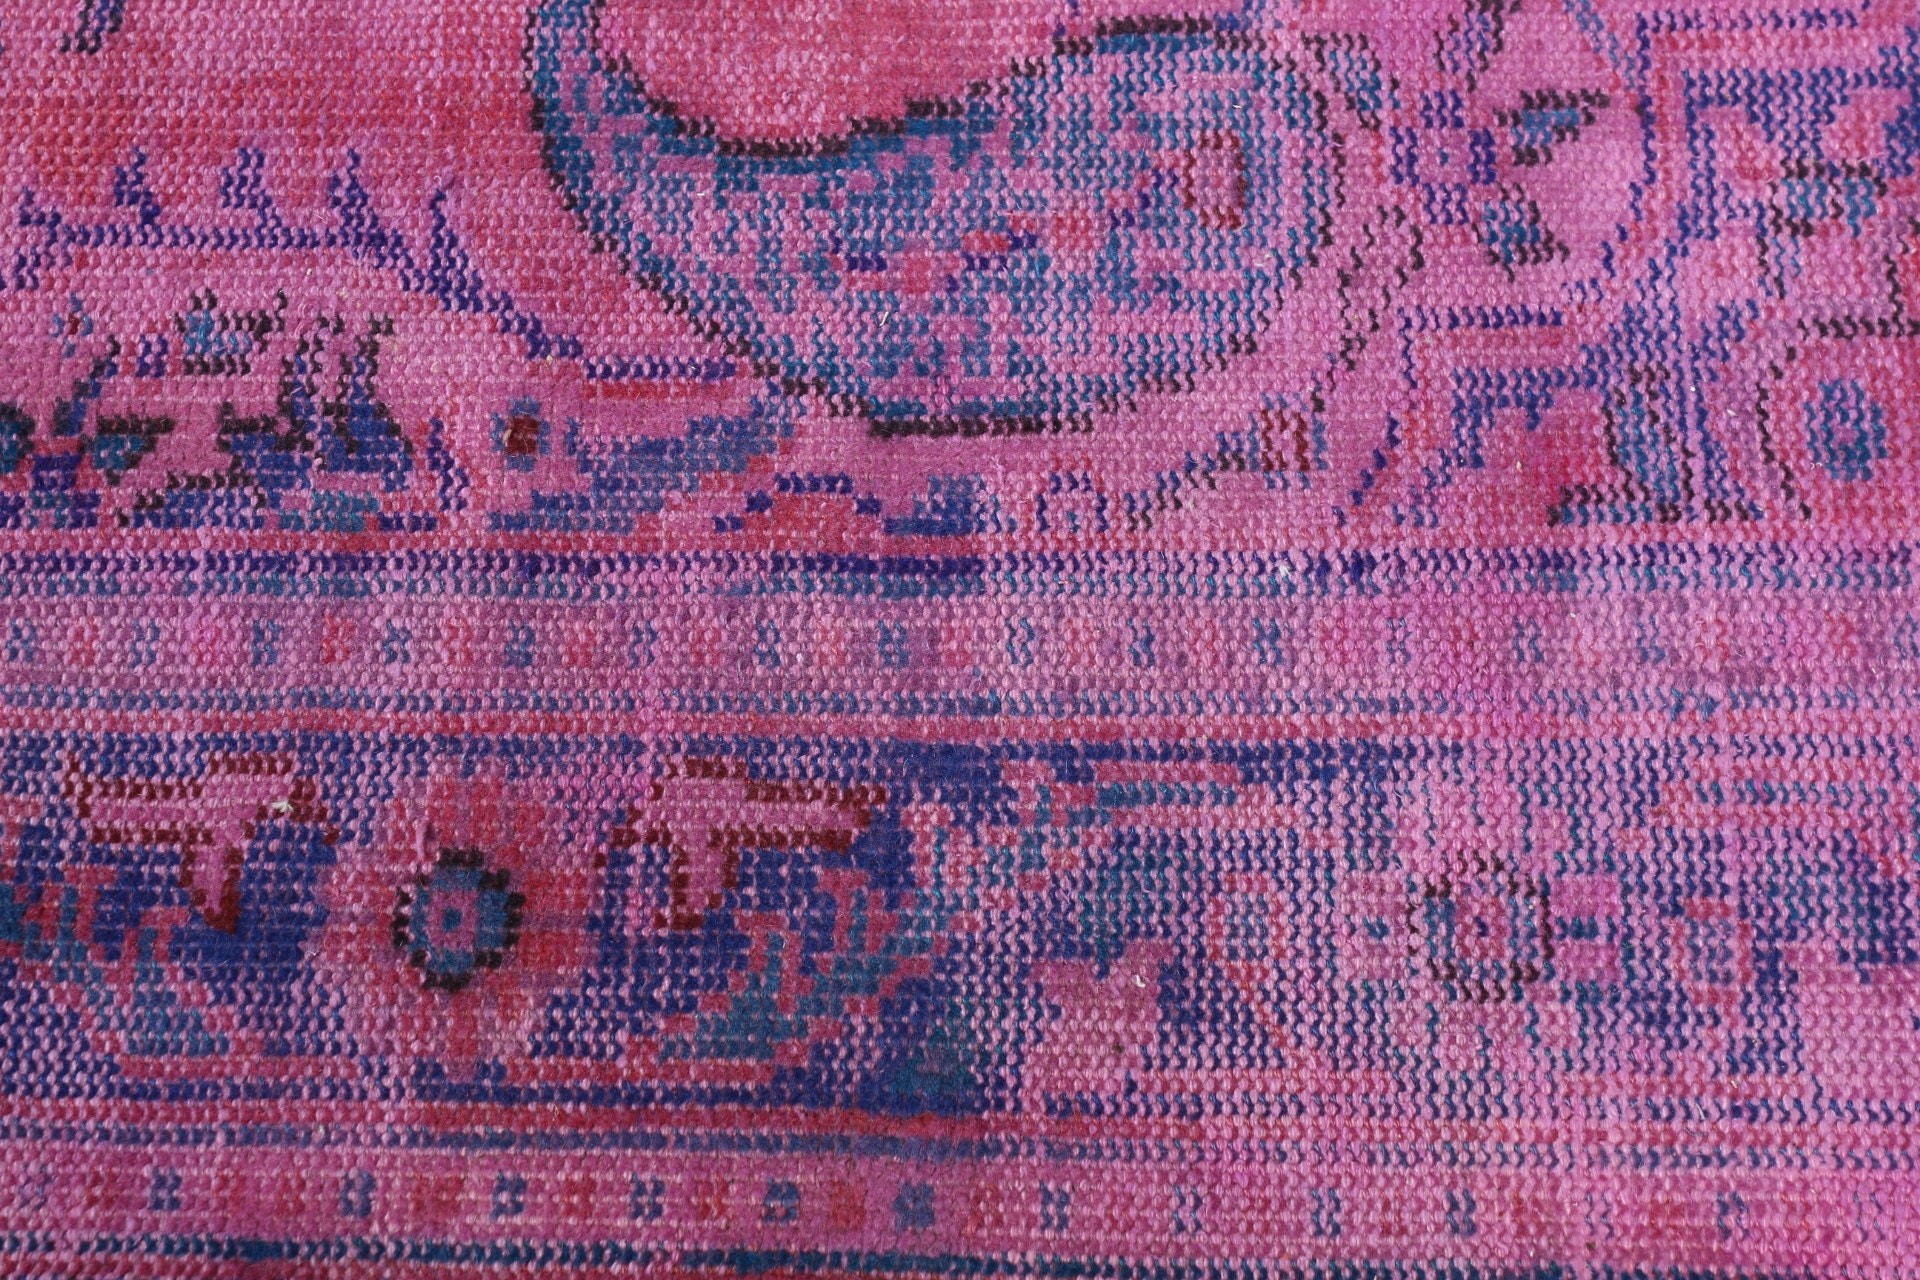 Moroccan Rugs, Pink Wool Rugs, Vintage Rug, Car Mat Rugs, Nomadic Rugs, Turkish Rugs, Wall Hanging Rug, Kitchen Rugs, 1.6x3.3 ft Small Rugs